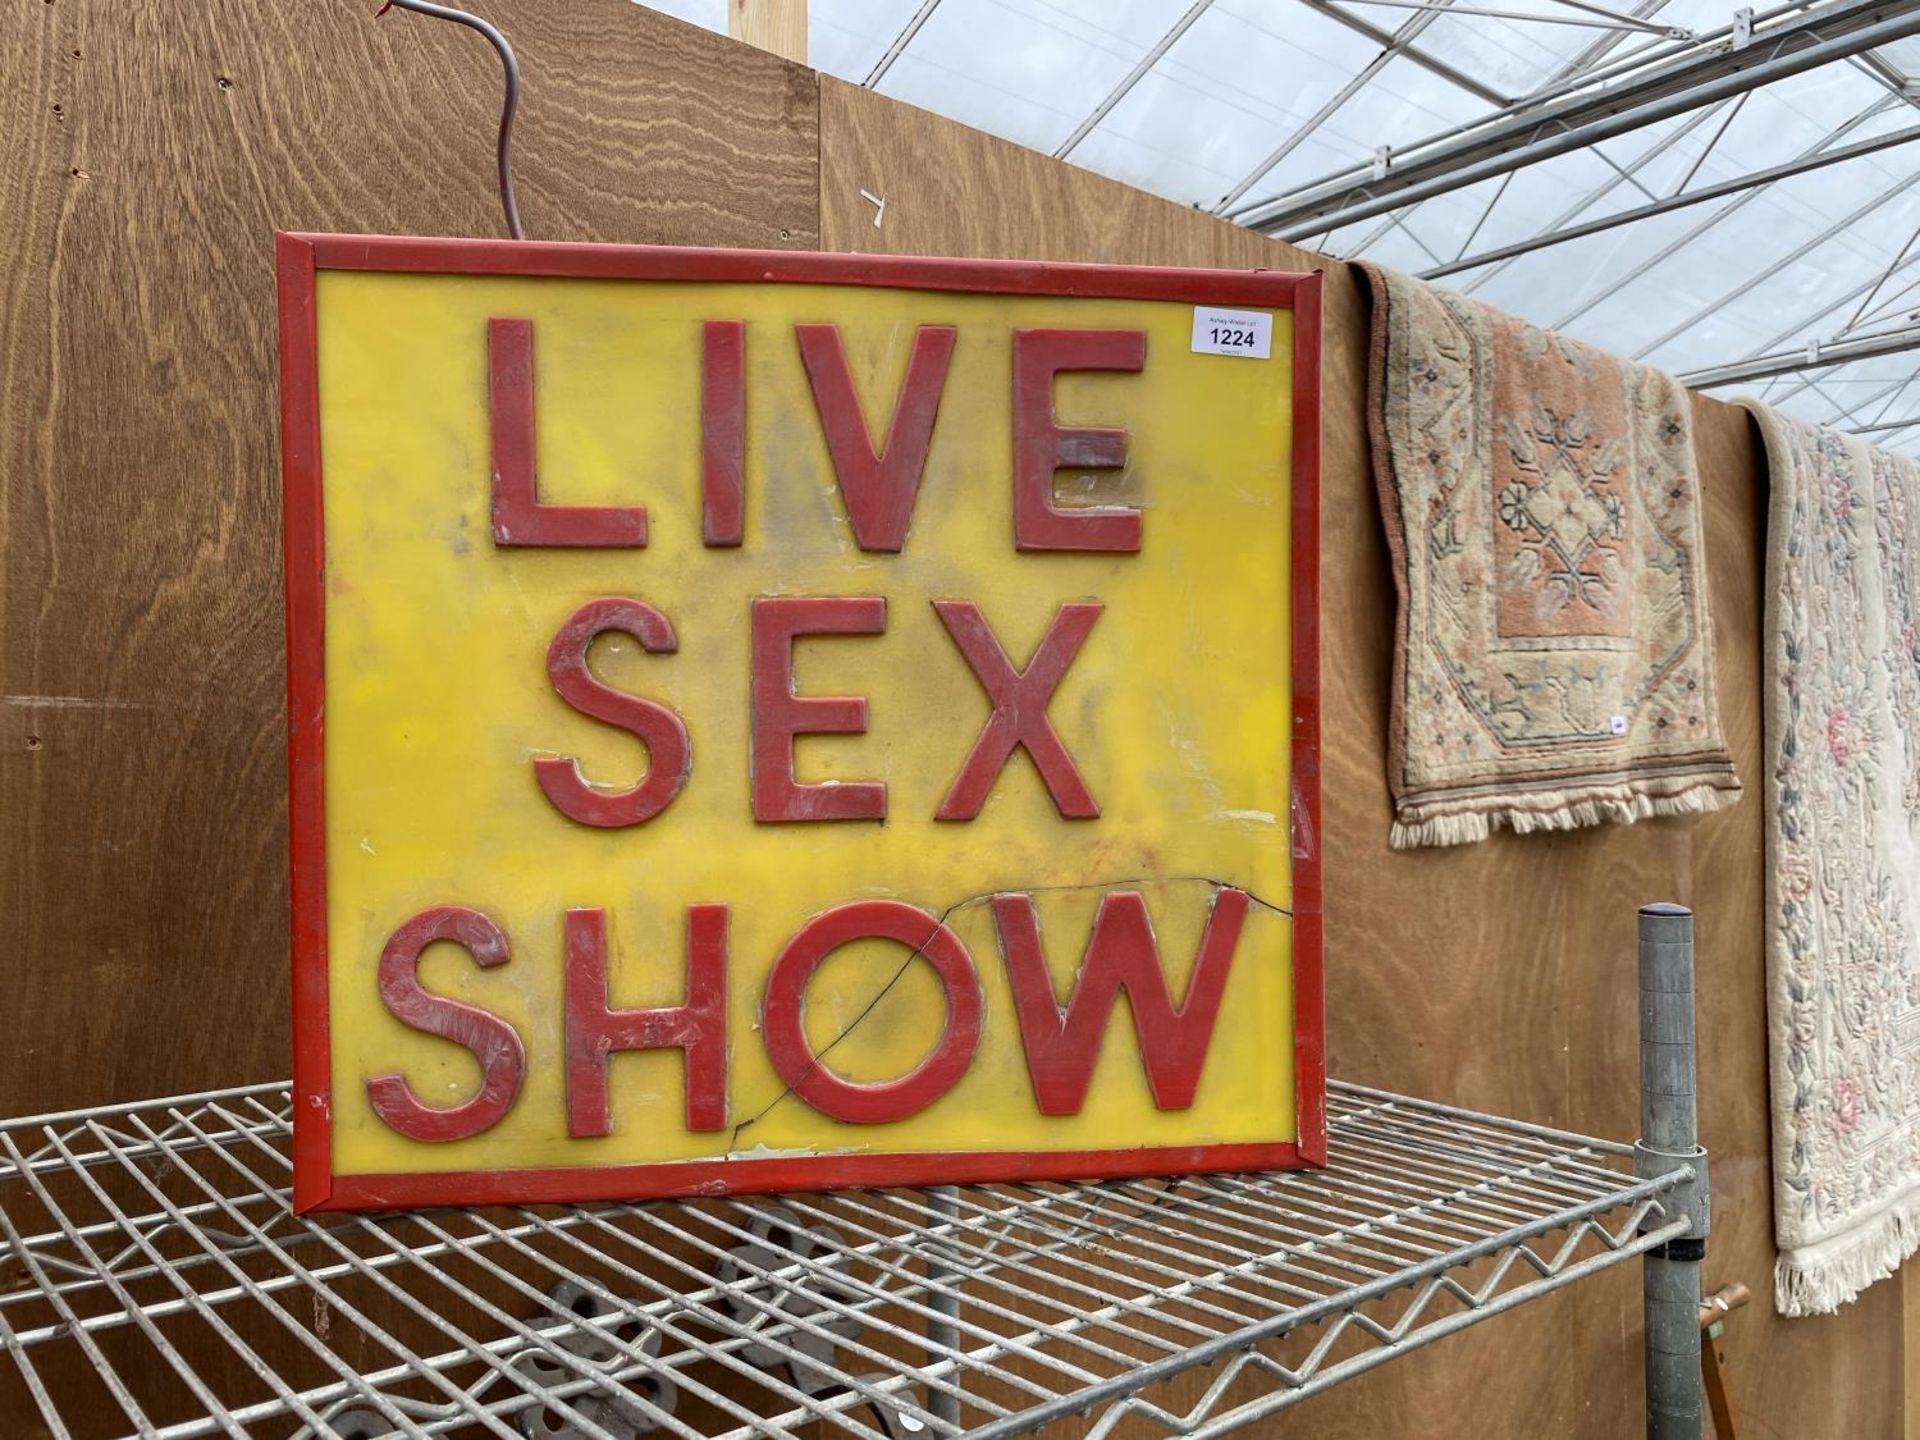 AN ILLUMINATED 'LIVE SEX SHOW' SIGN